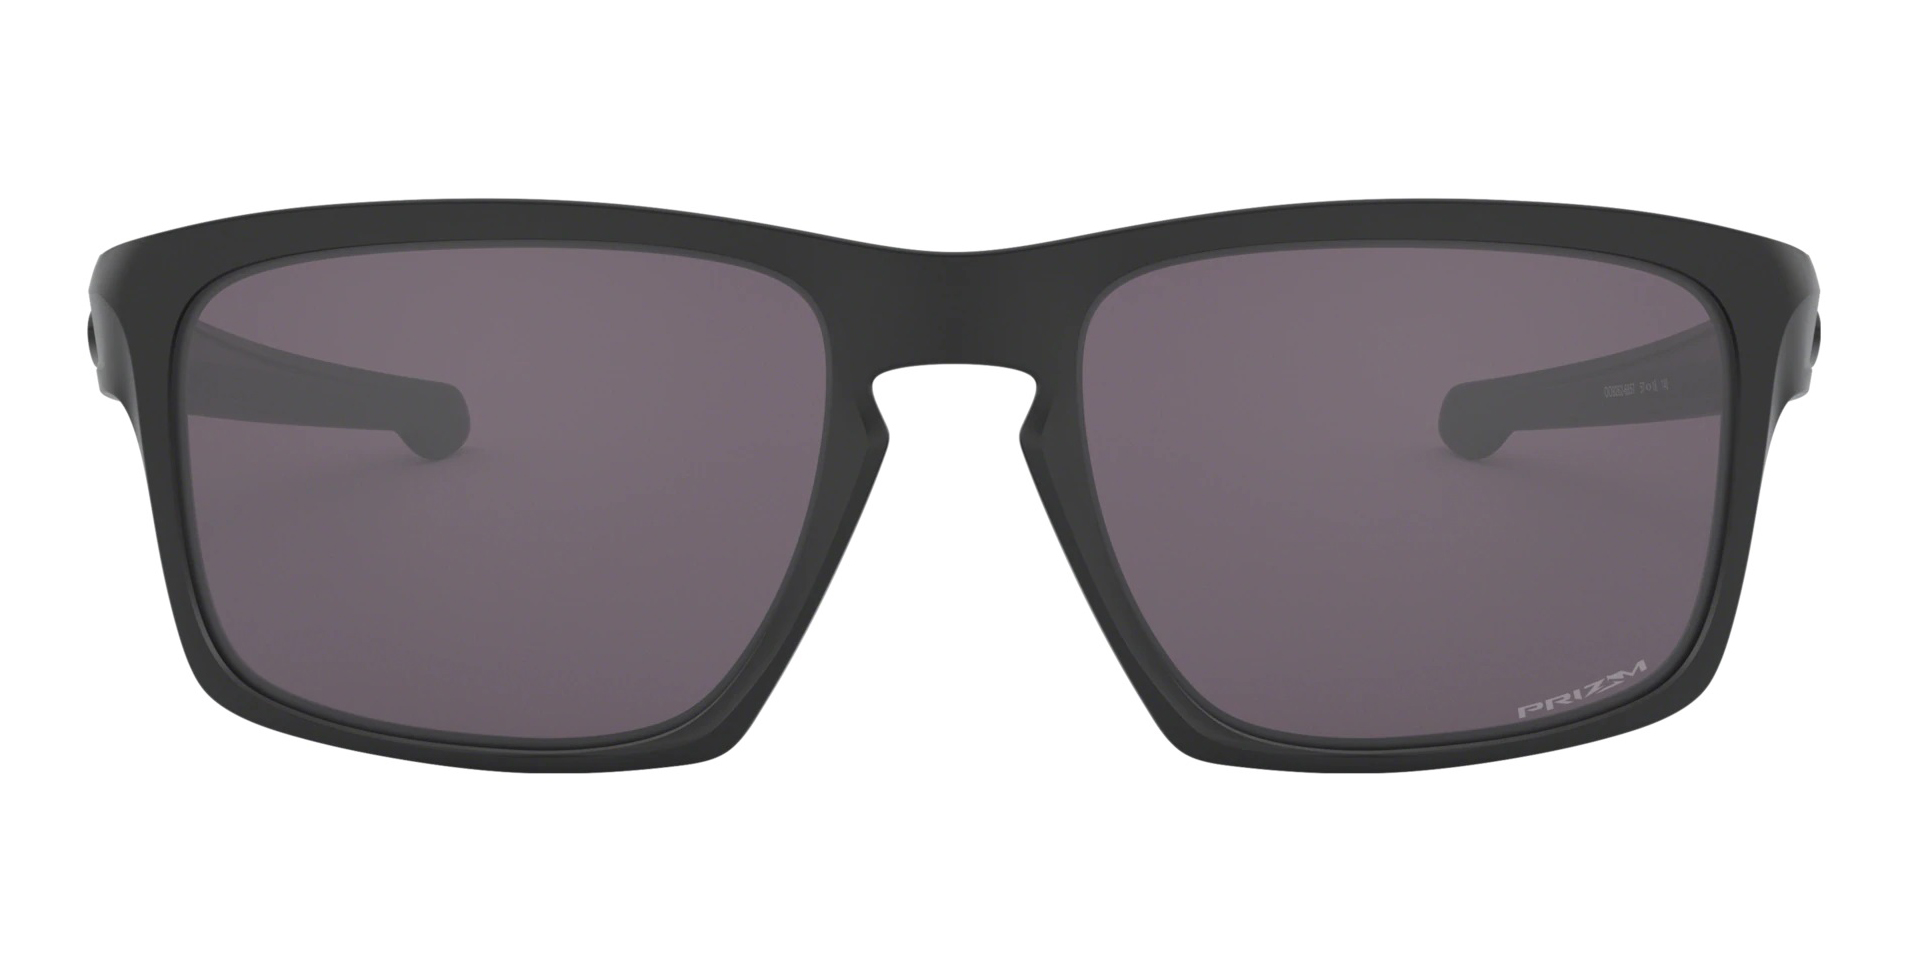 vision express oakley sunglasses